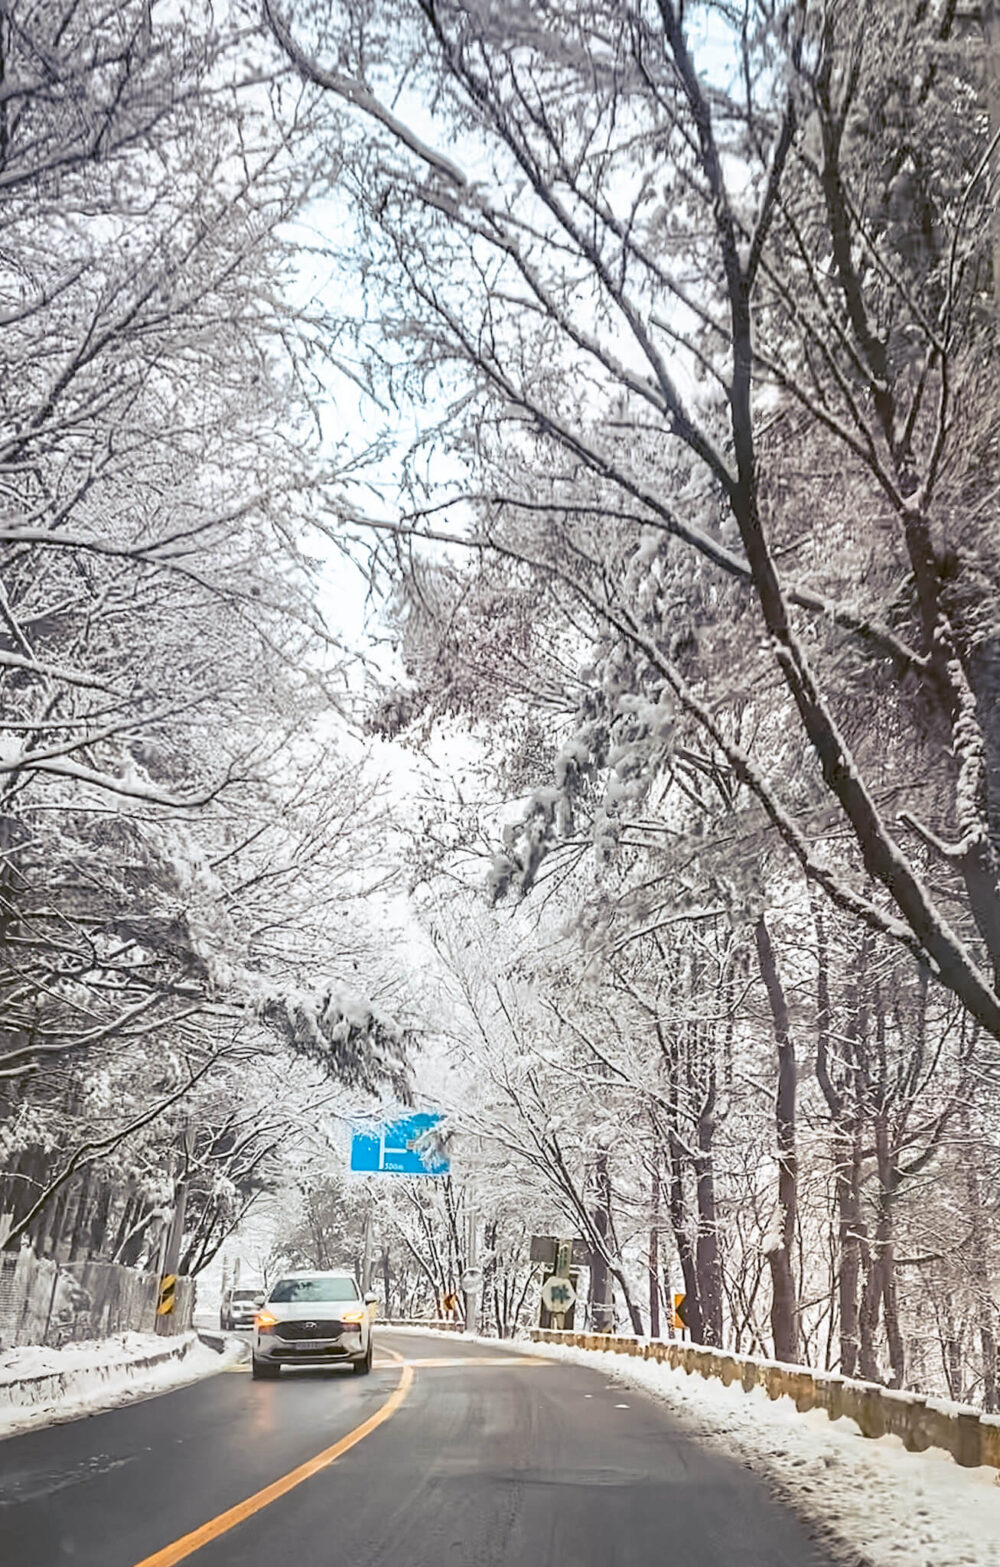 Korea in january | snowy road